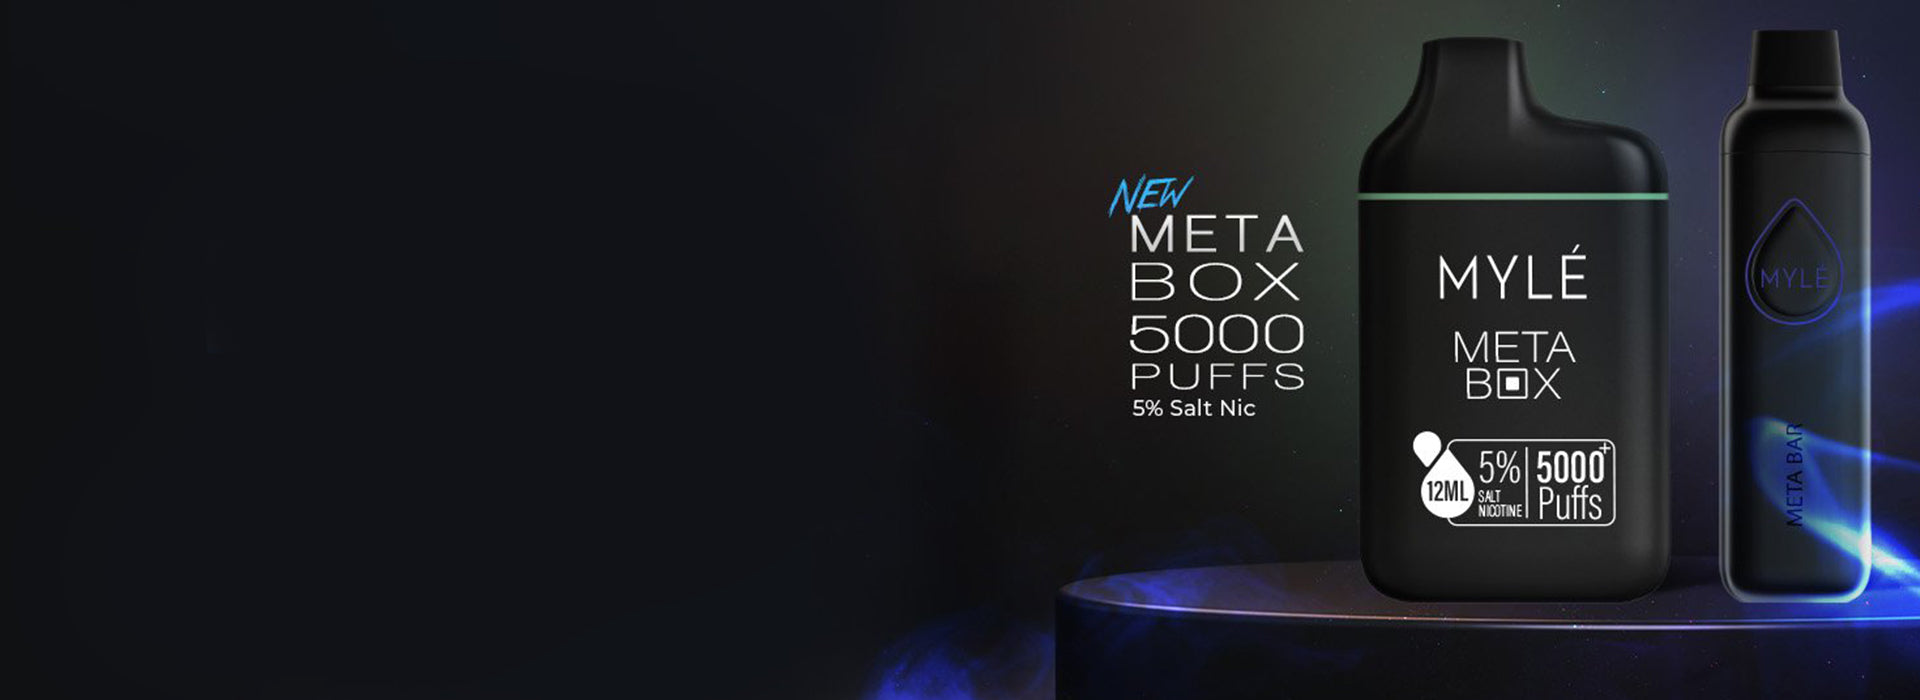 Myle meta bar and meta box